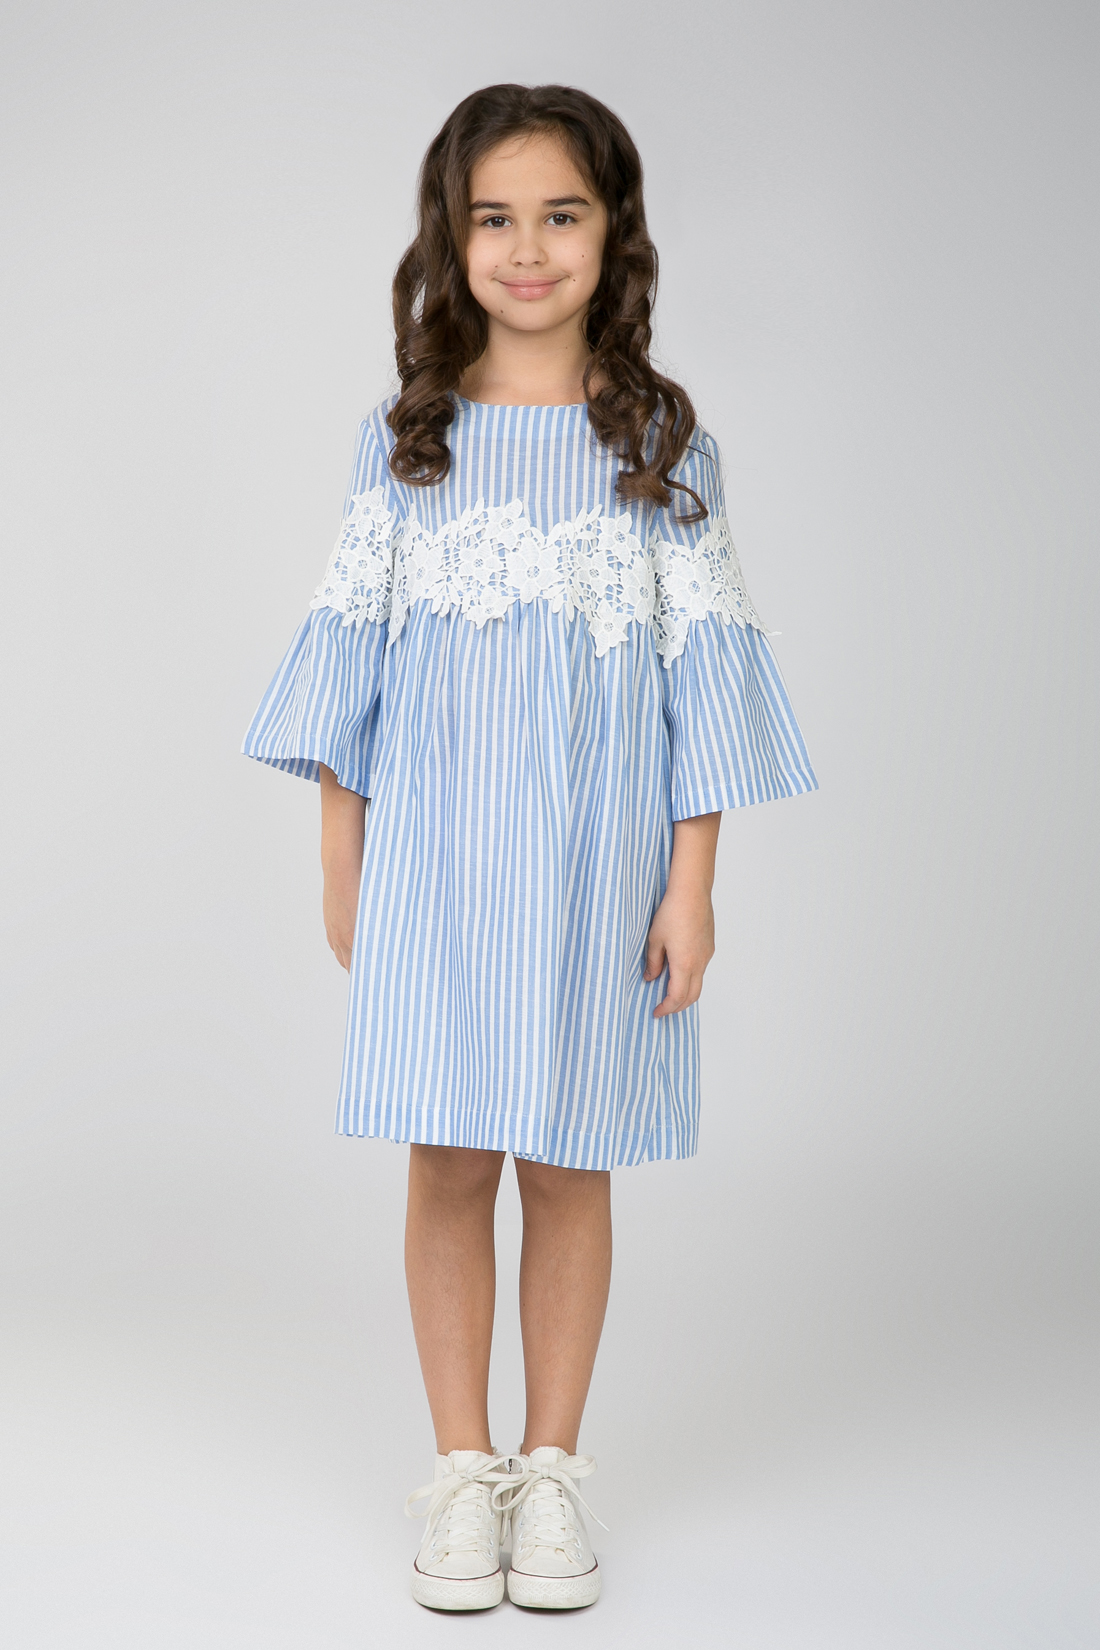 Платье для девочки (арт. baon BJ458008), размер 146-152, цвет angel blue striped#голубой